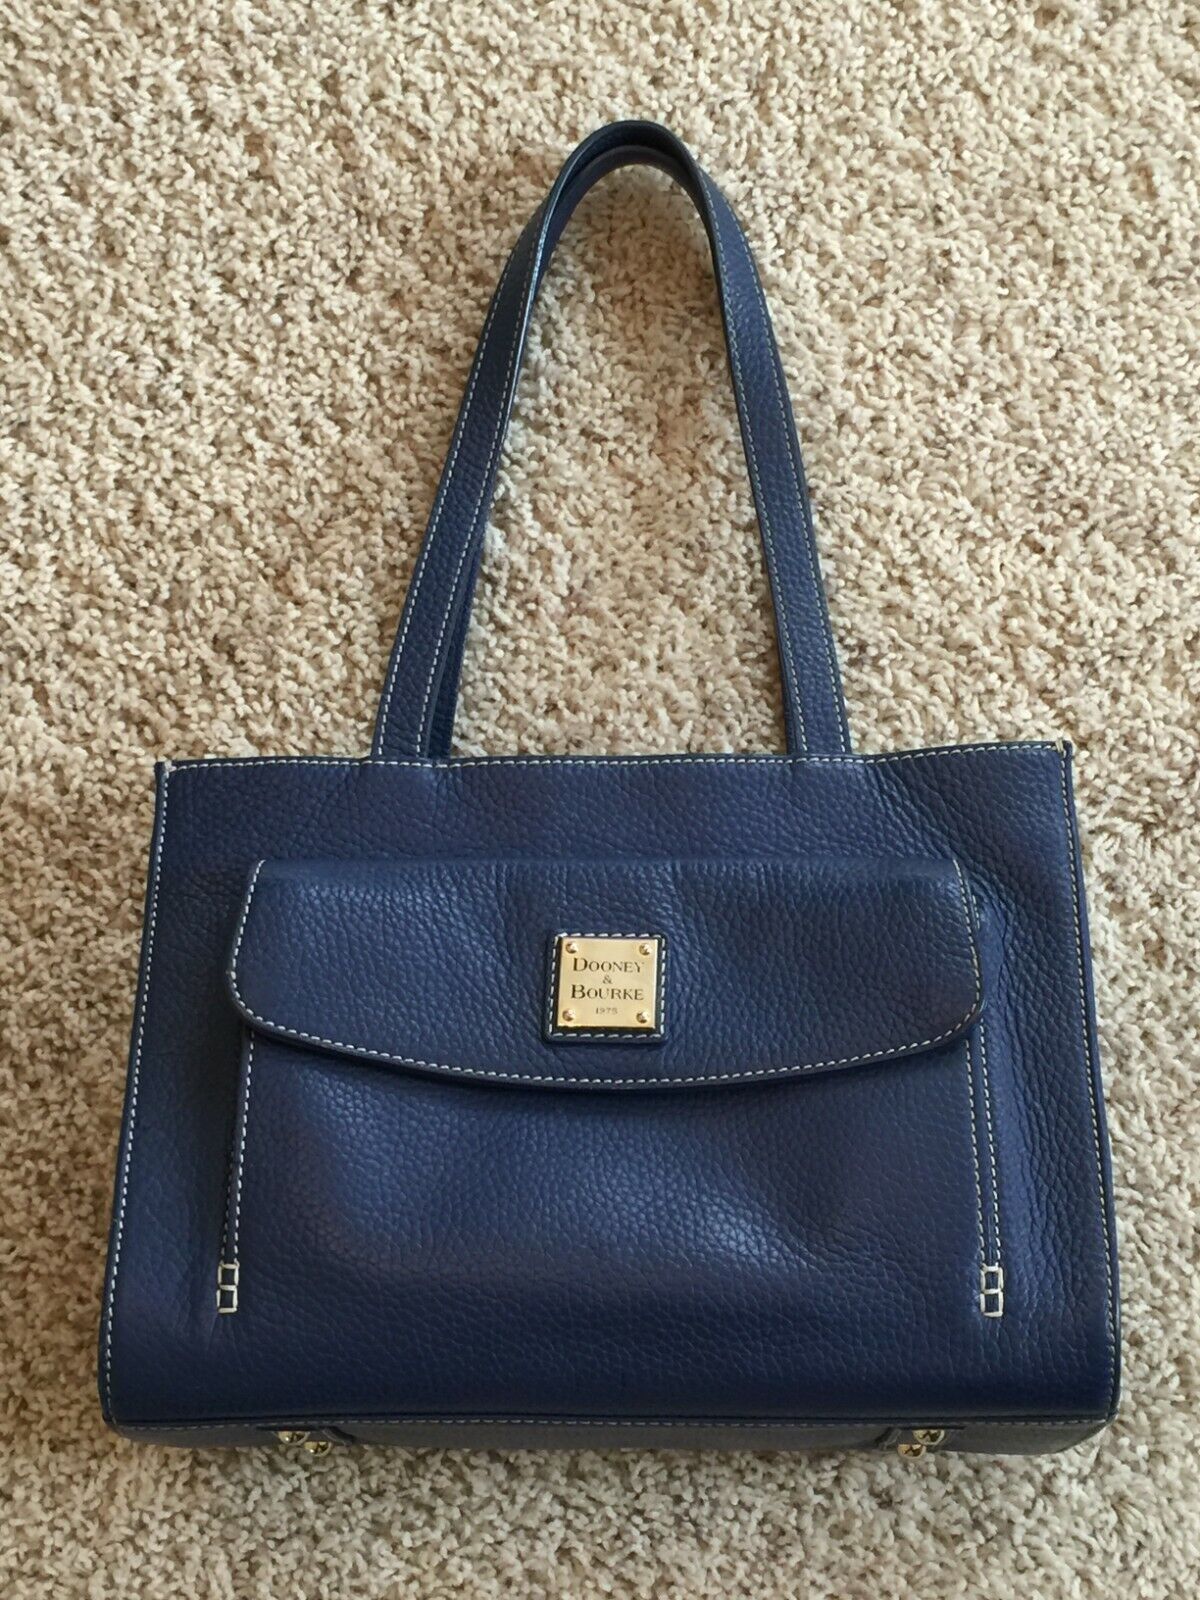 Rich Blue Dooney Bourke Janine Pebble Grain Leather Handbag $238 Very Good Condi